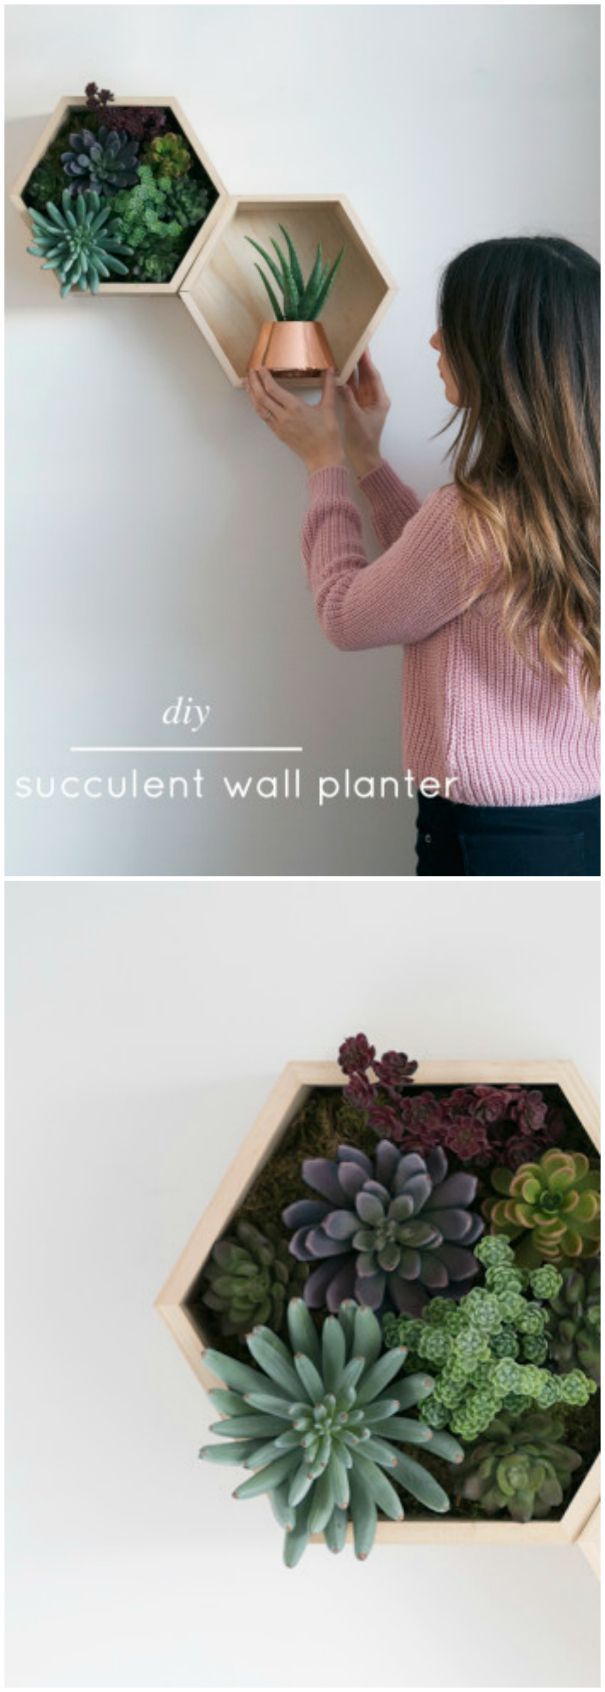 9 stunning wall planters